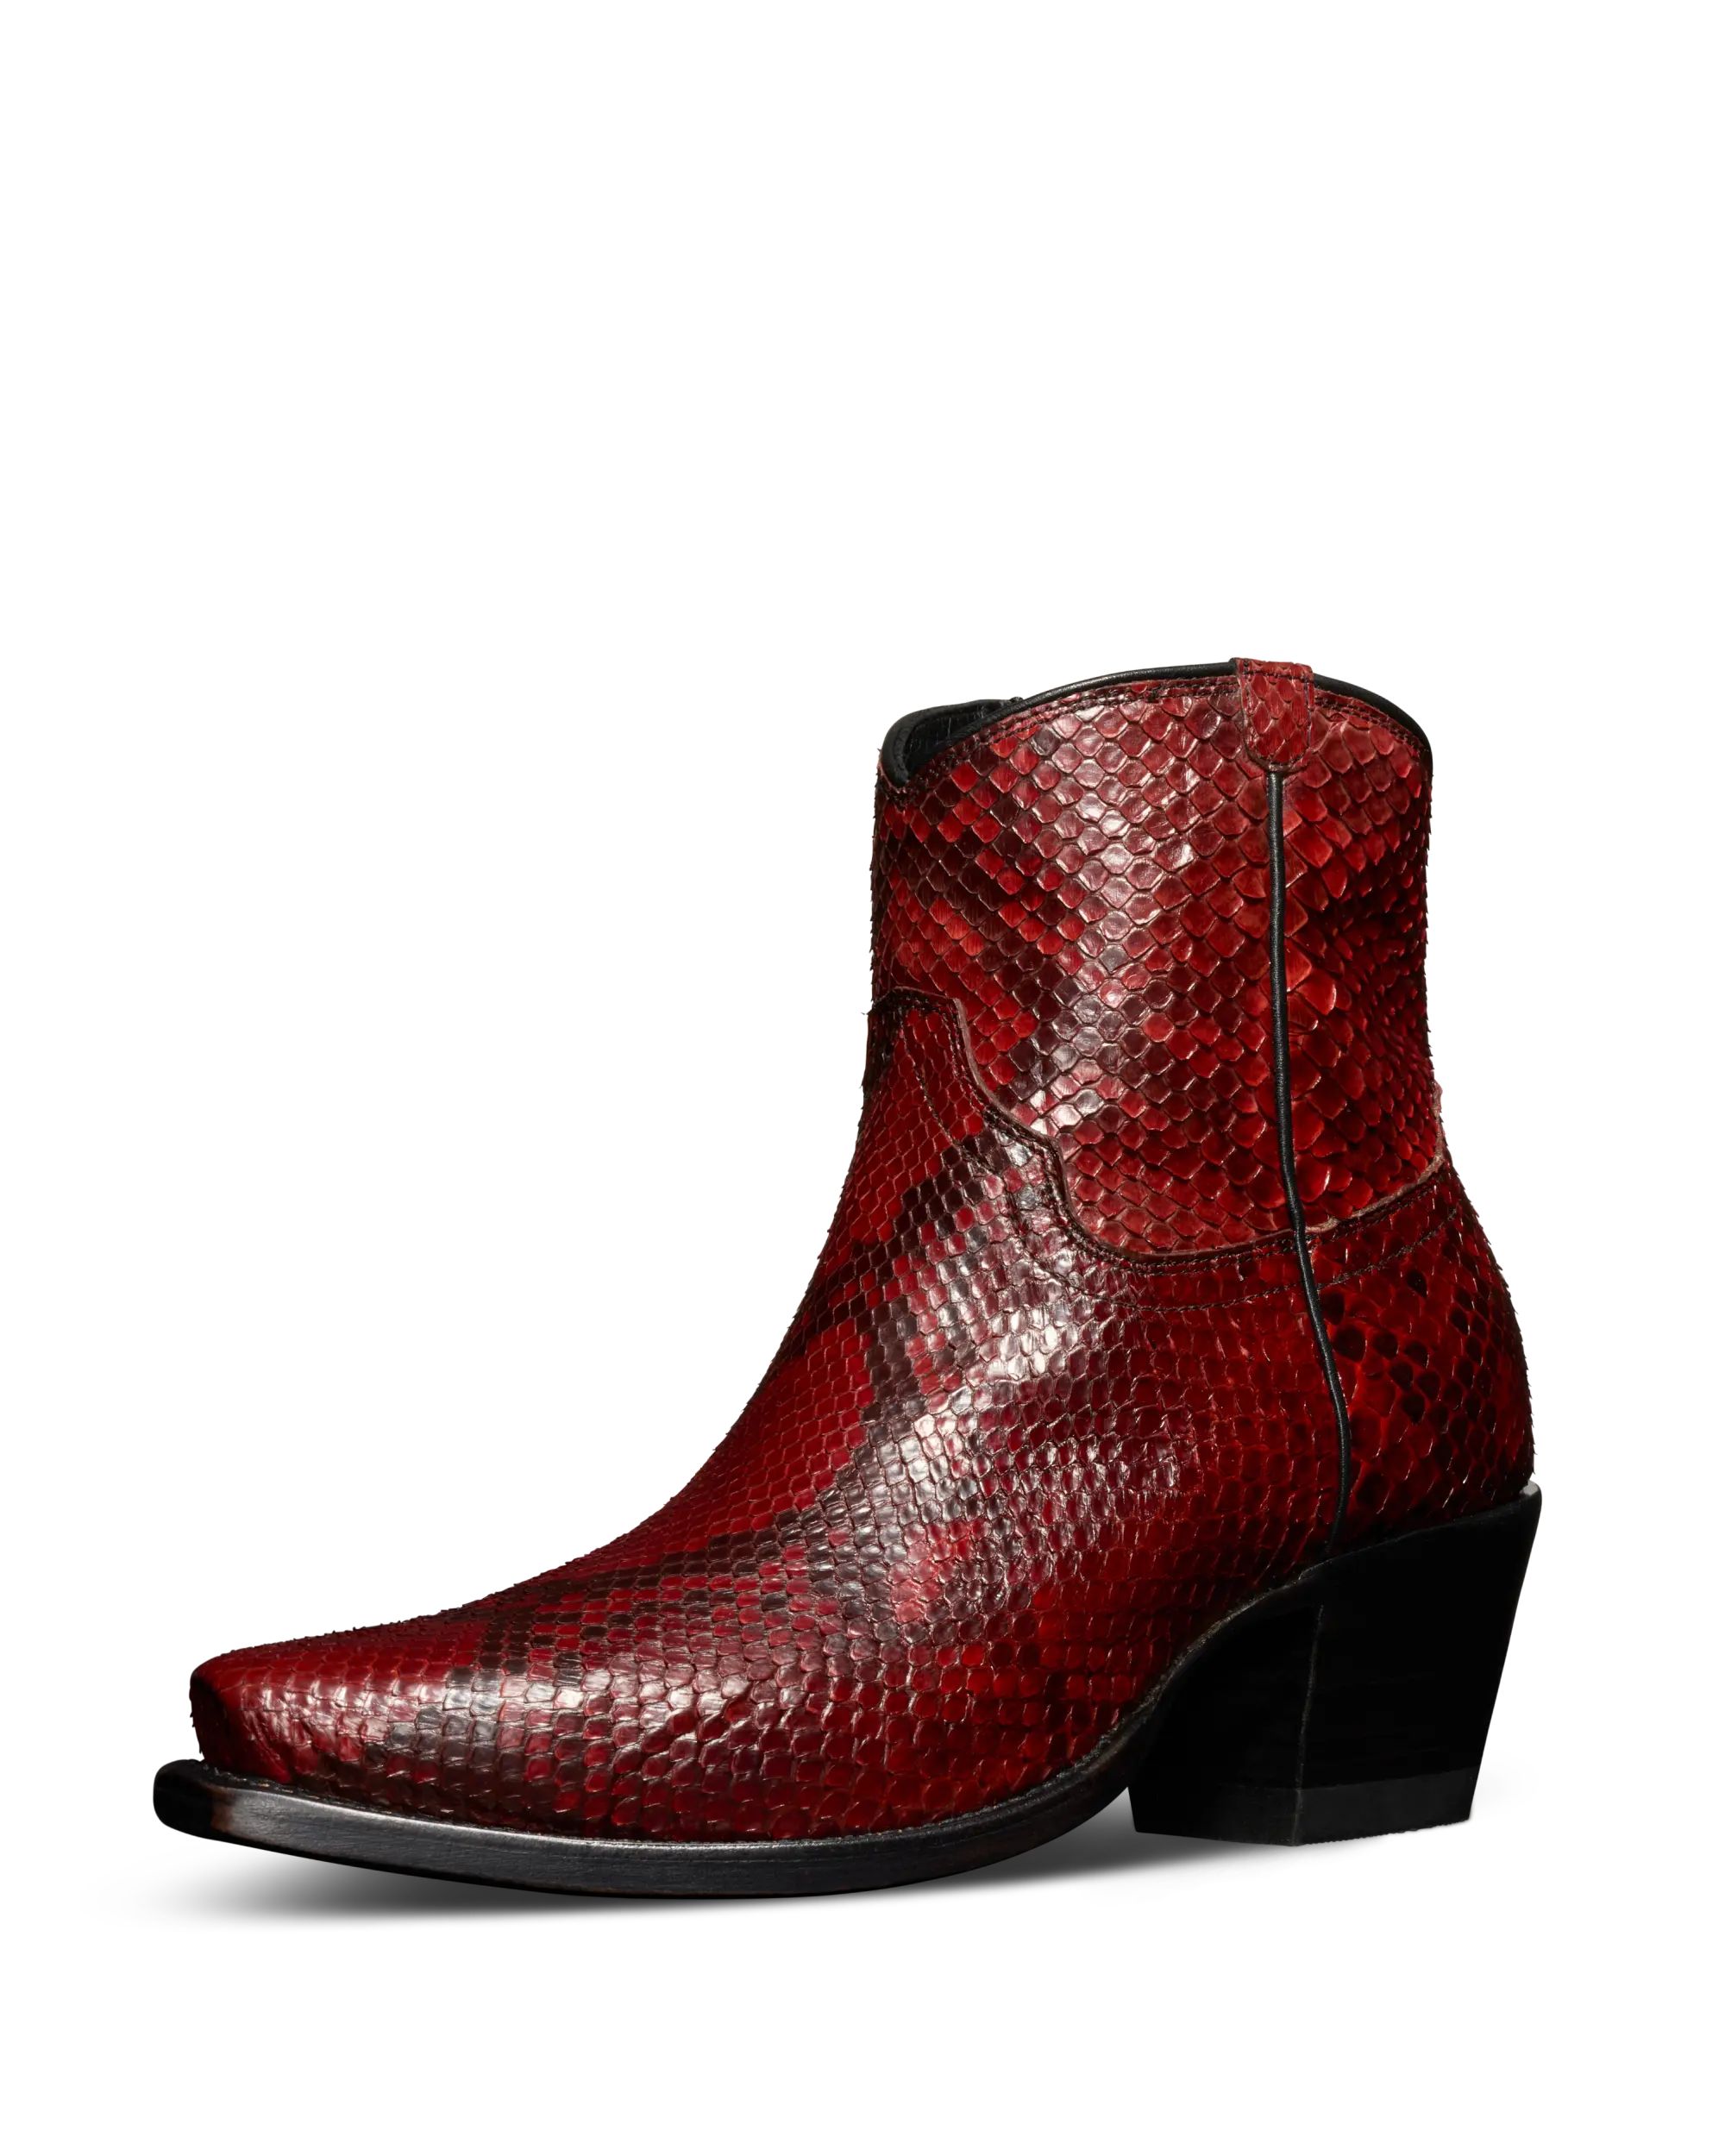 Women's Ankle Boots | The Daisy - Burgundy | Tecovas | Tecovas